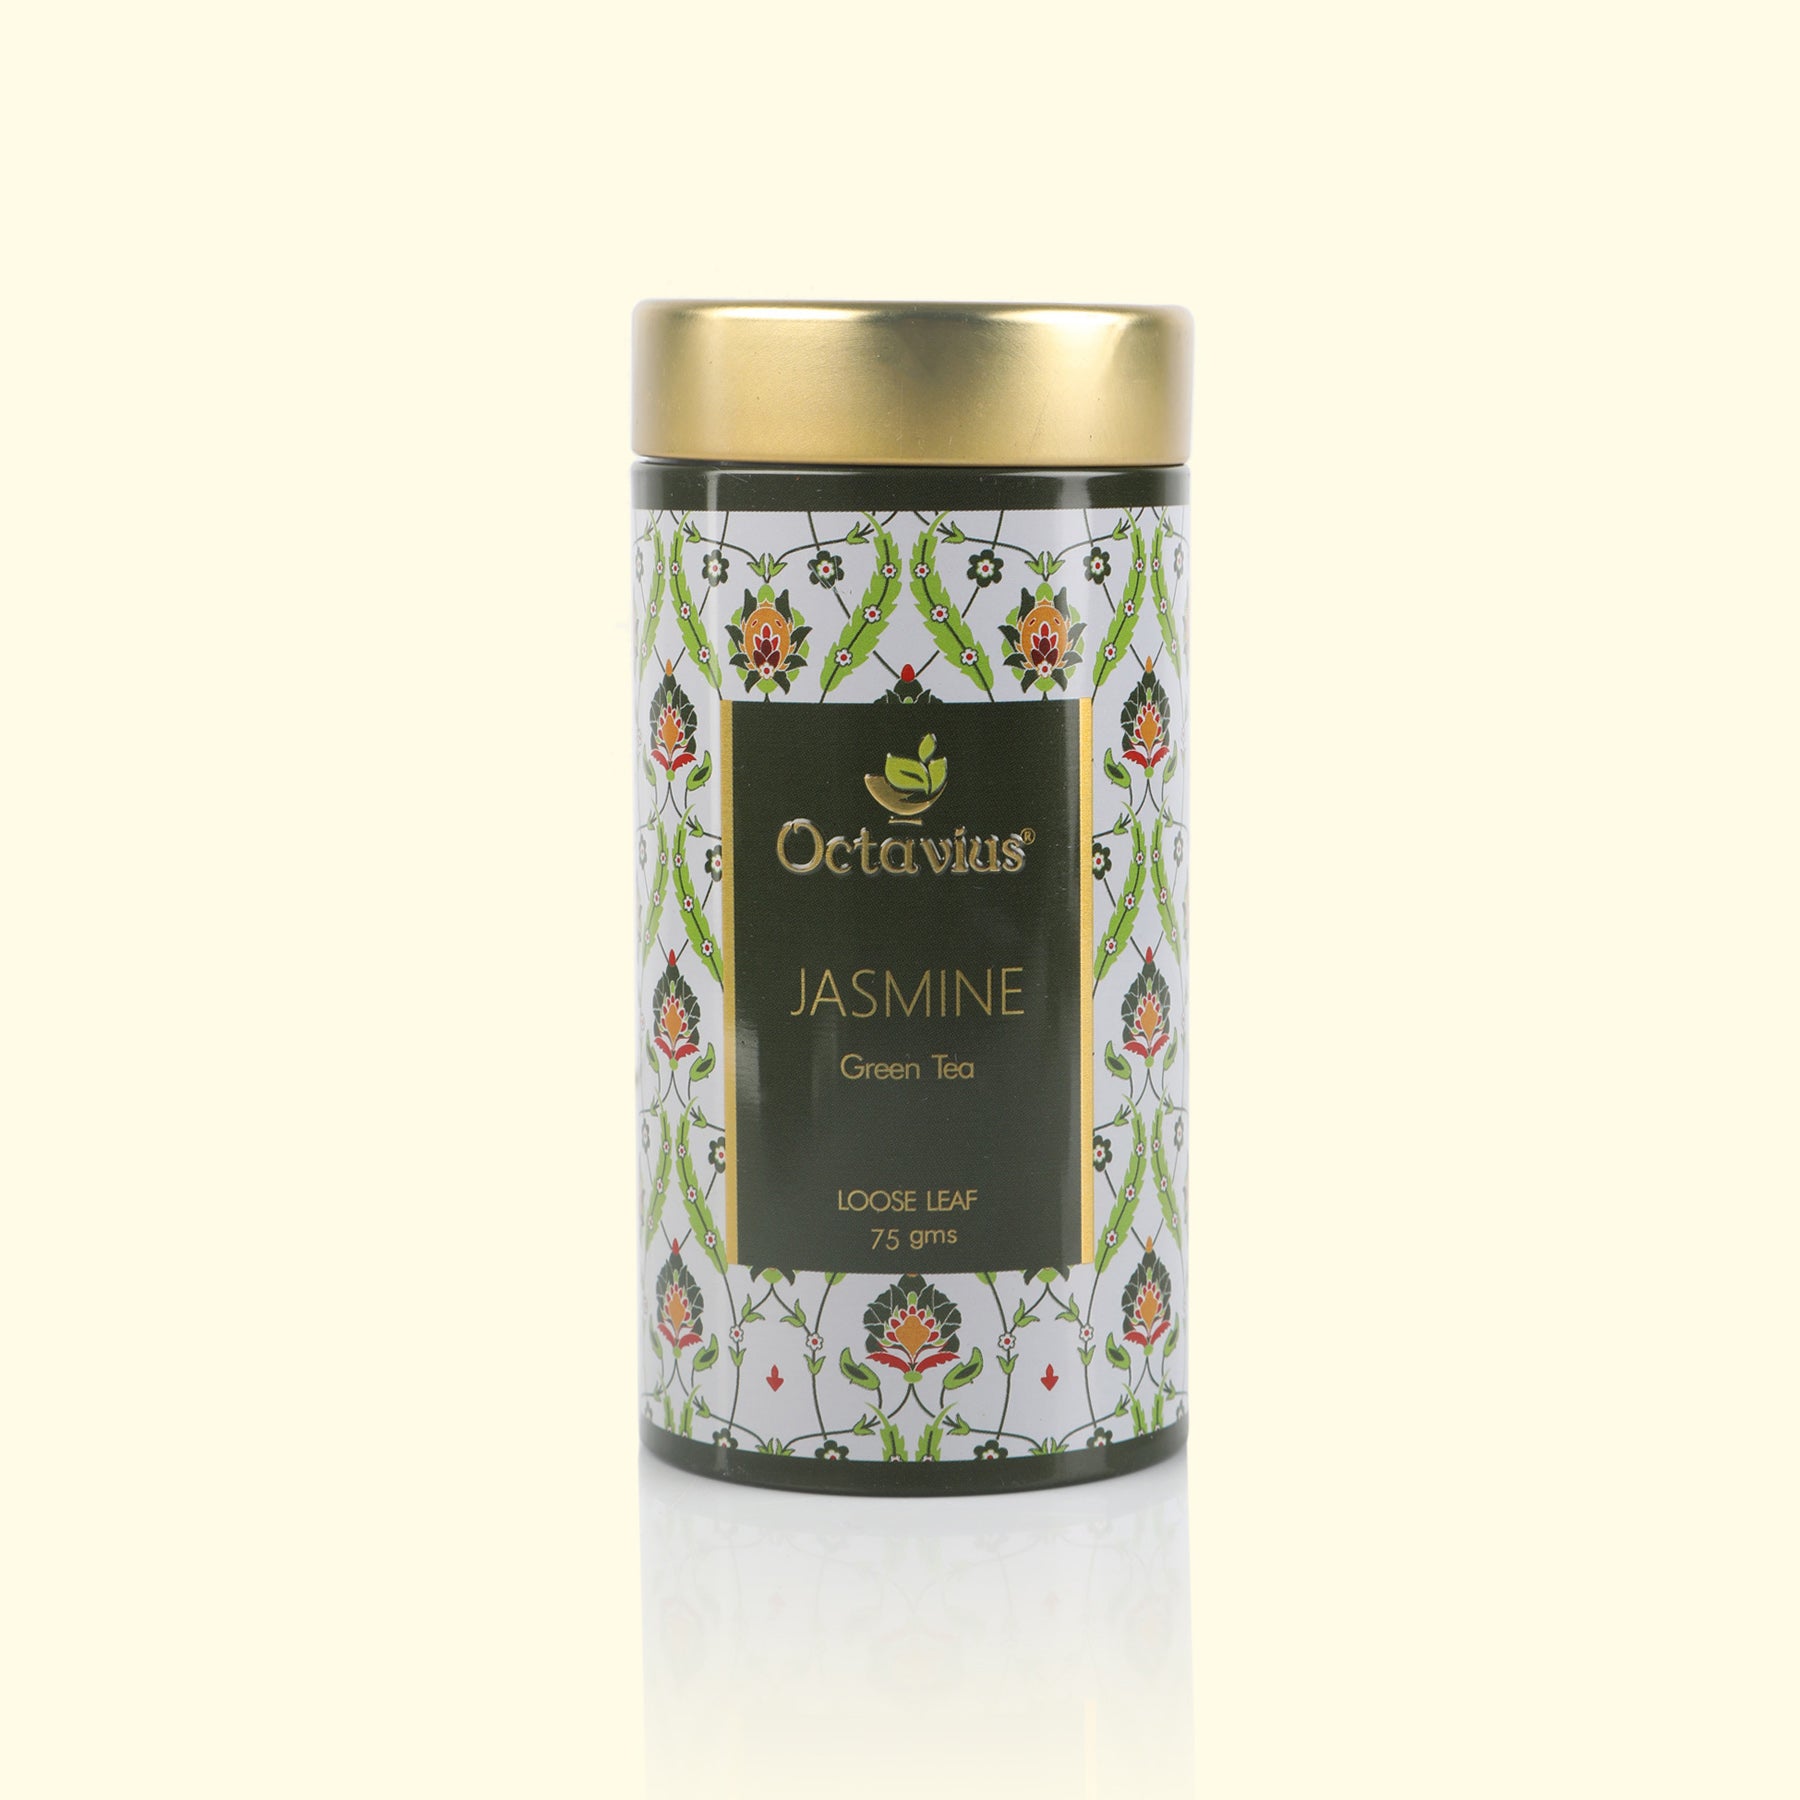 Jasmine Green Tea Loose Leaf - 75 Gms Tin Can